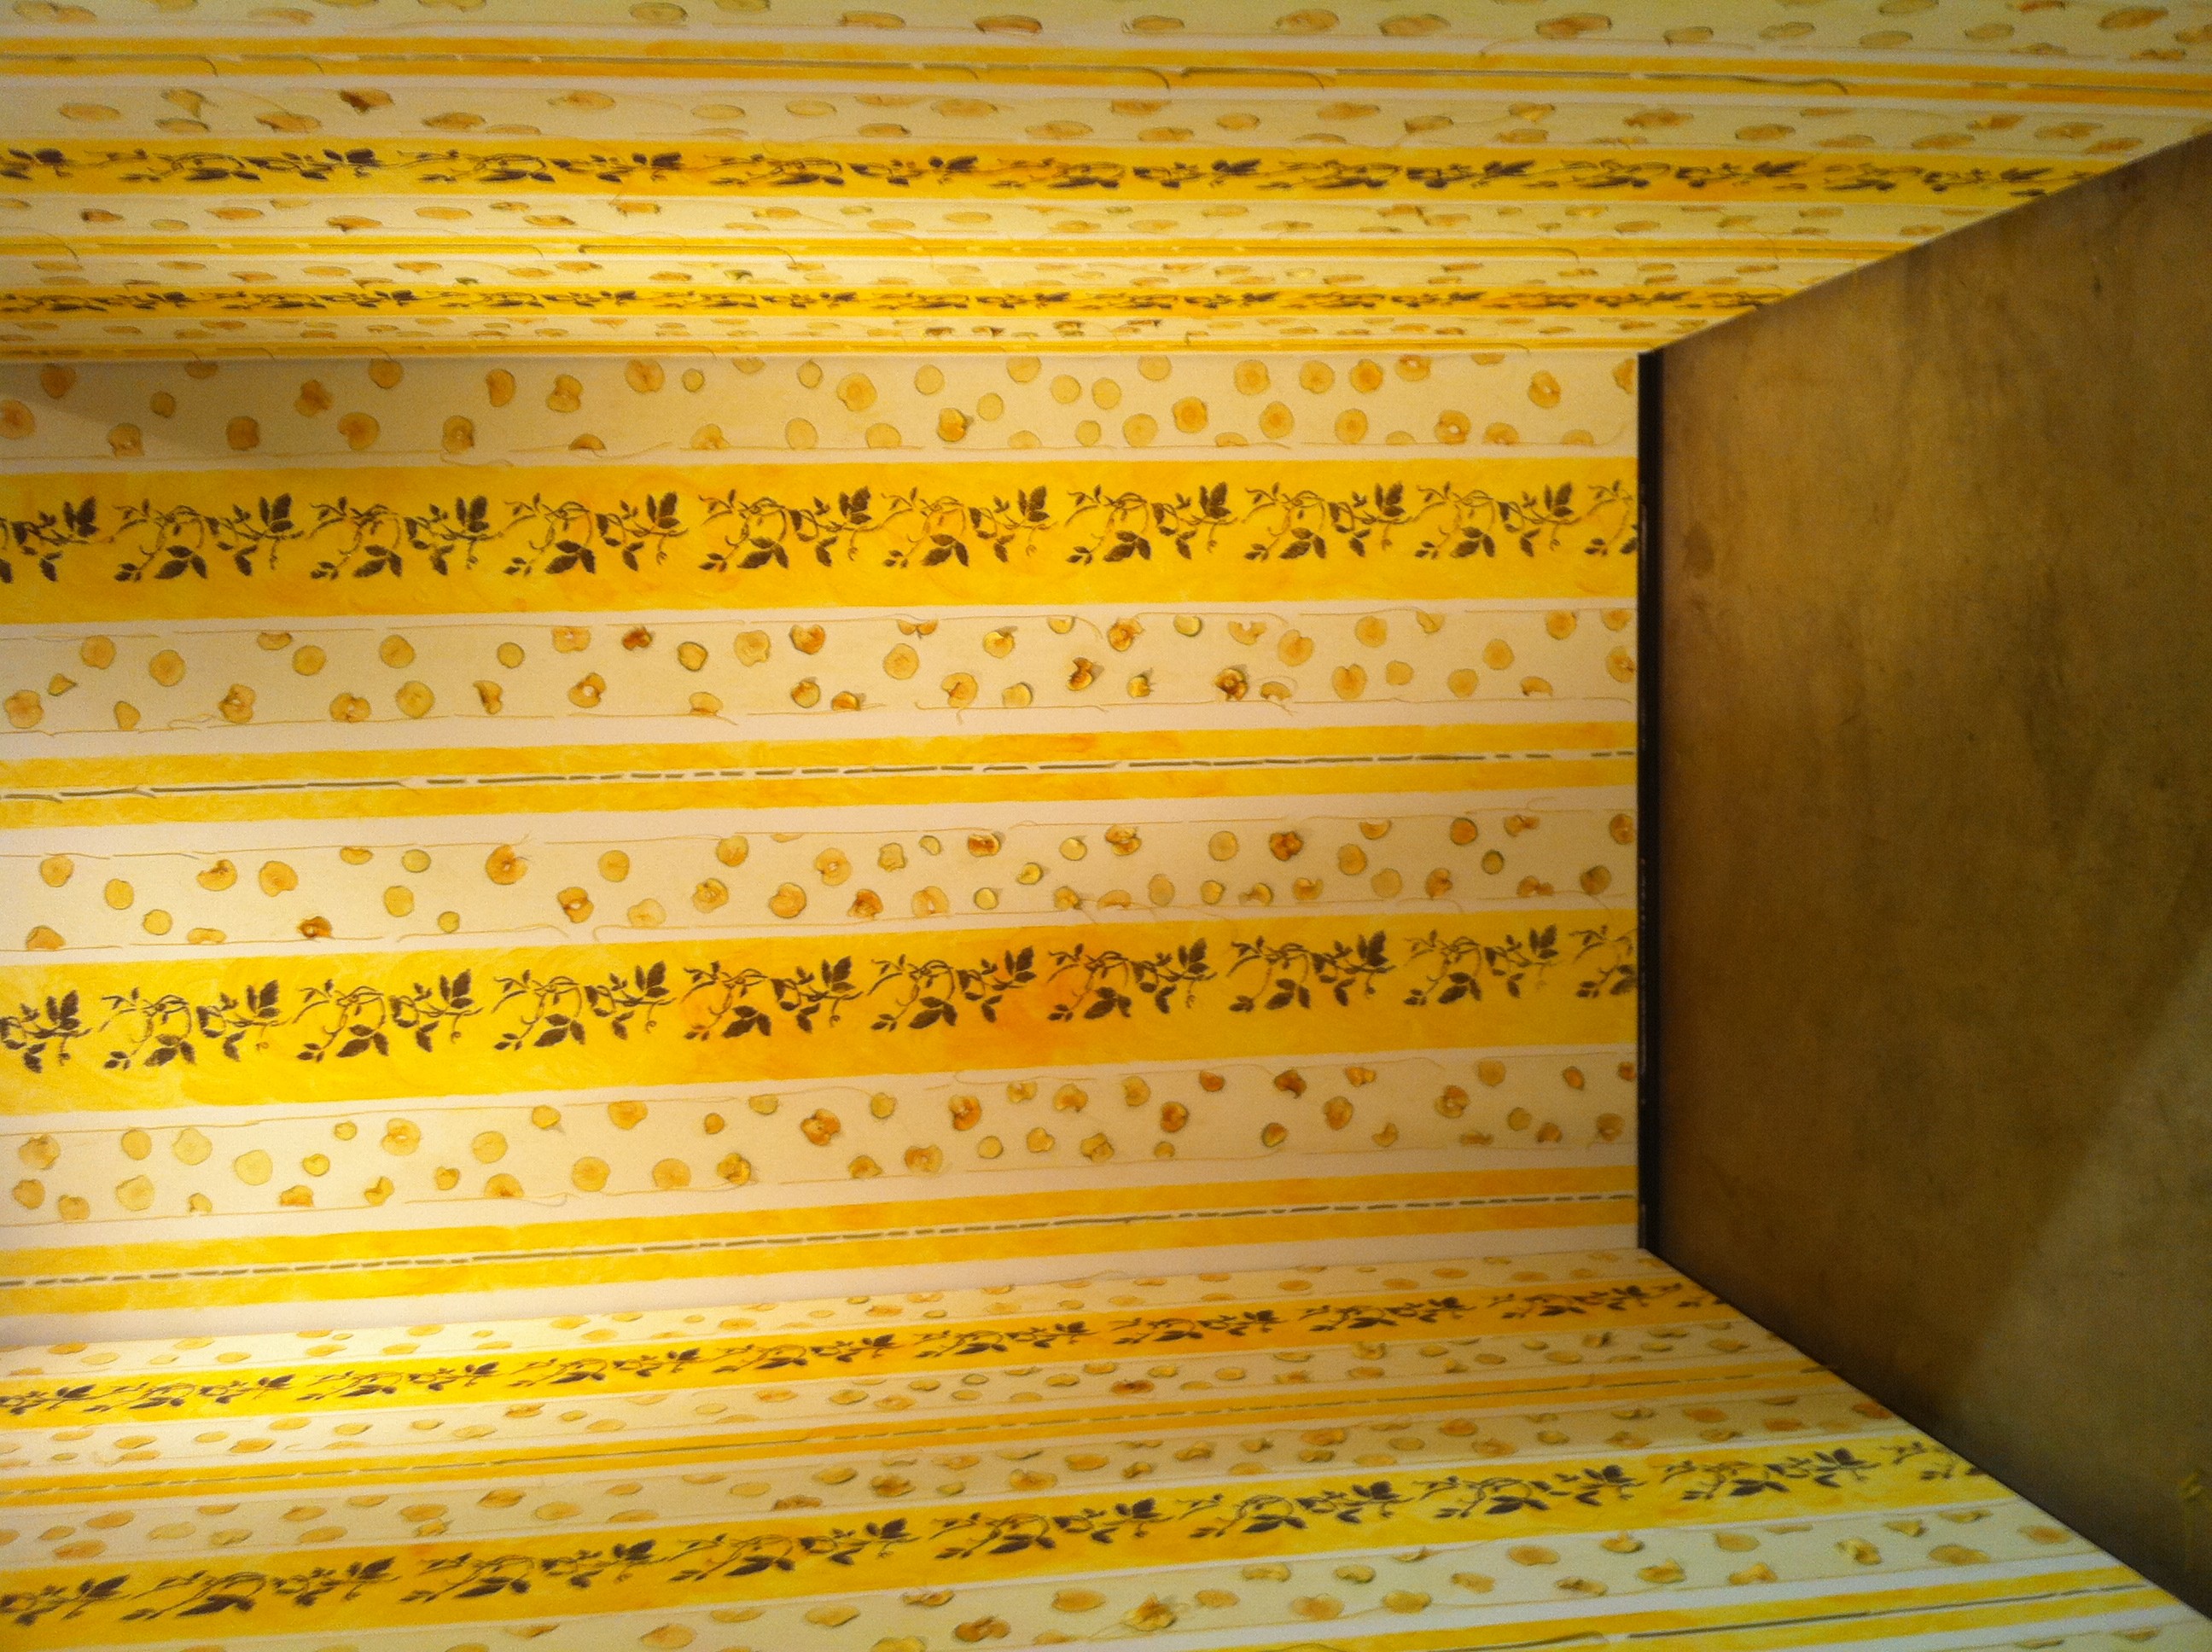 2592x1936 Literary analysis essay the yellow wallpaper Milwaukee college